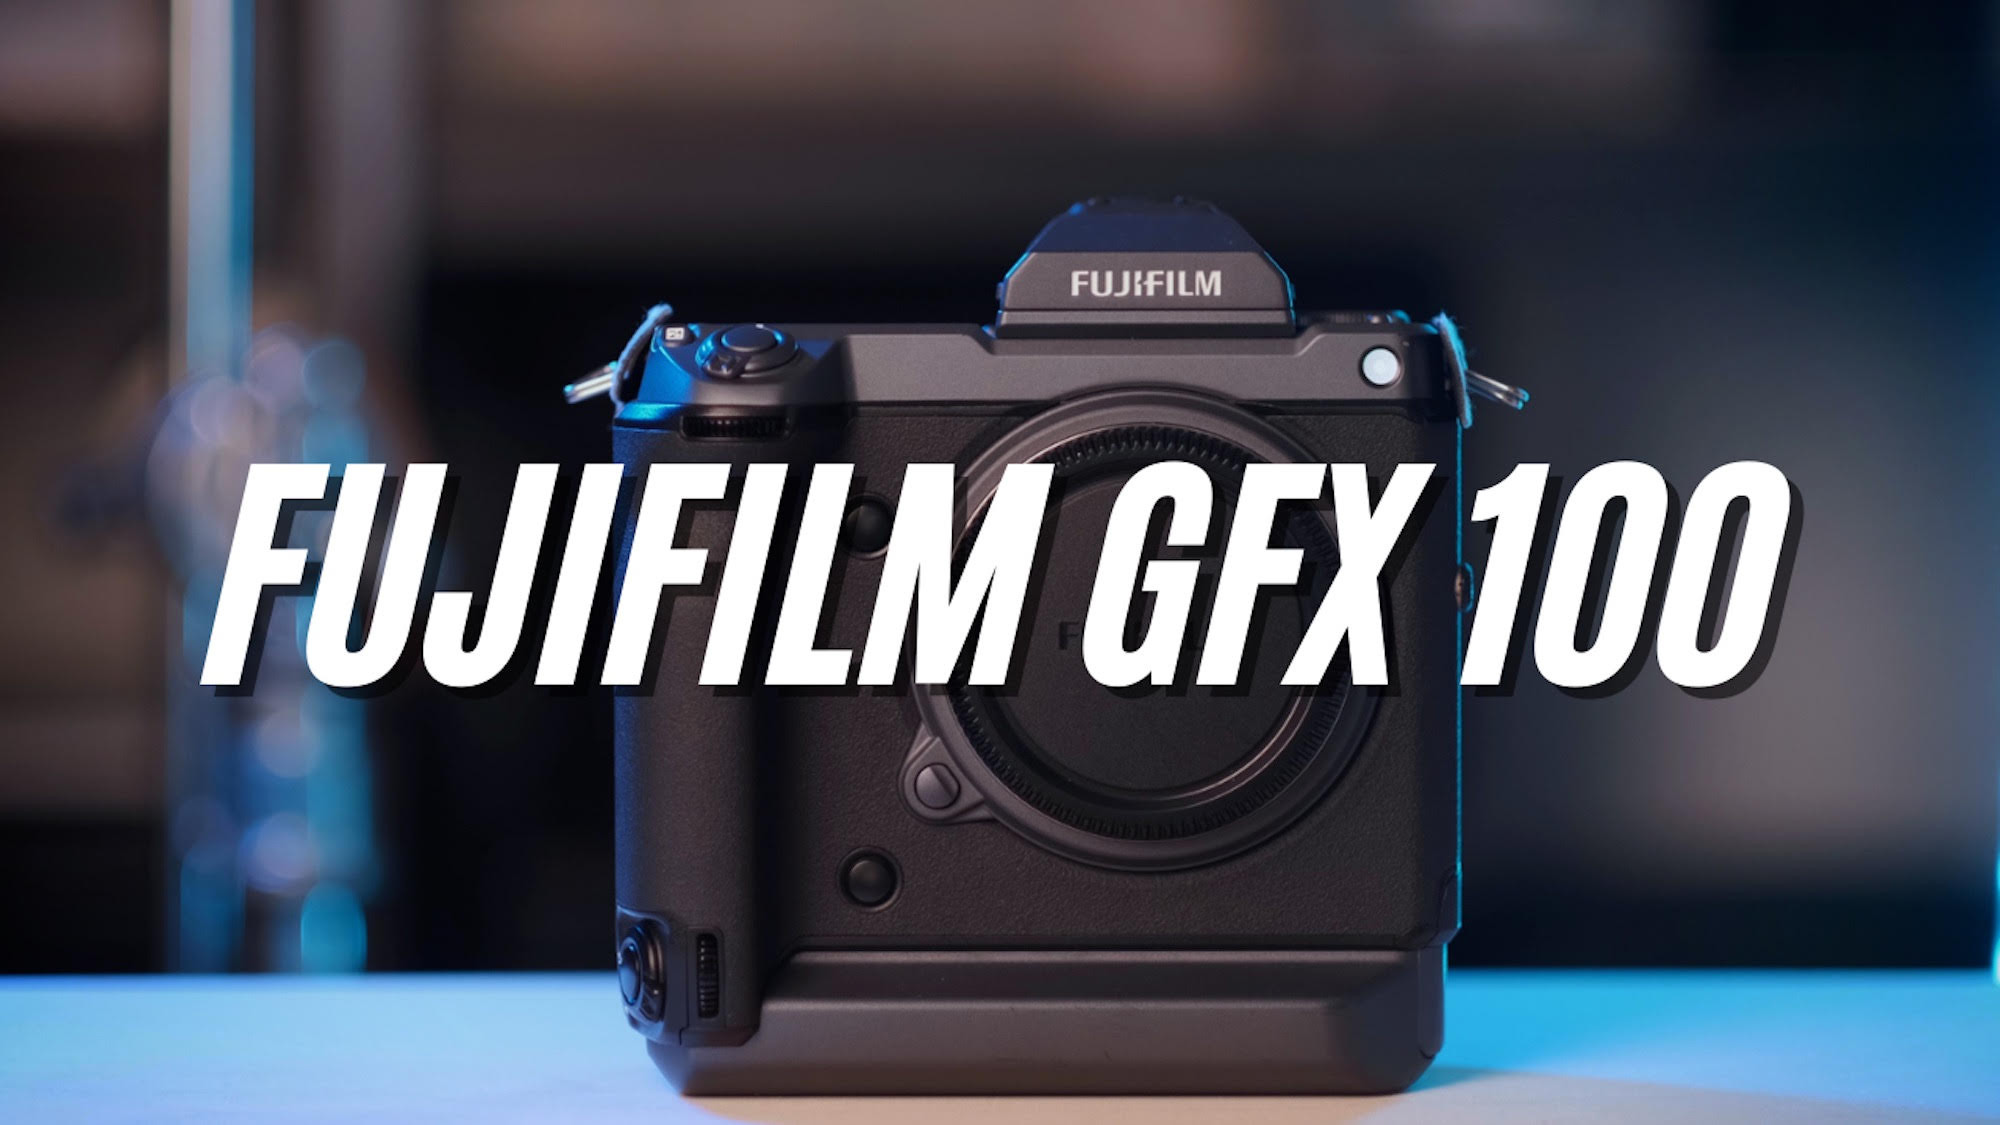 Fujifilm introduces new digital medium format SLR camera, the most compact camera of its kind